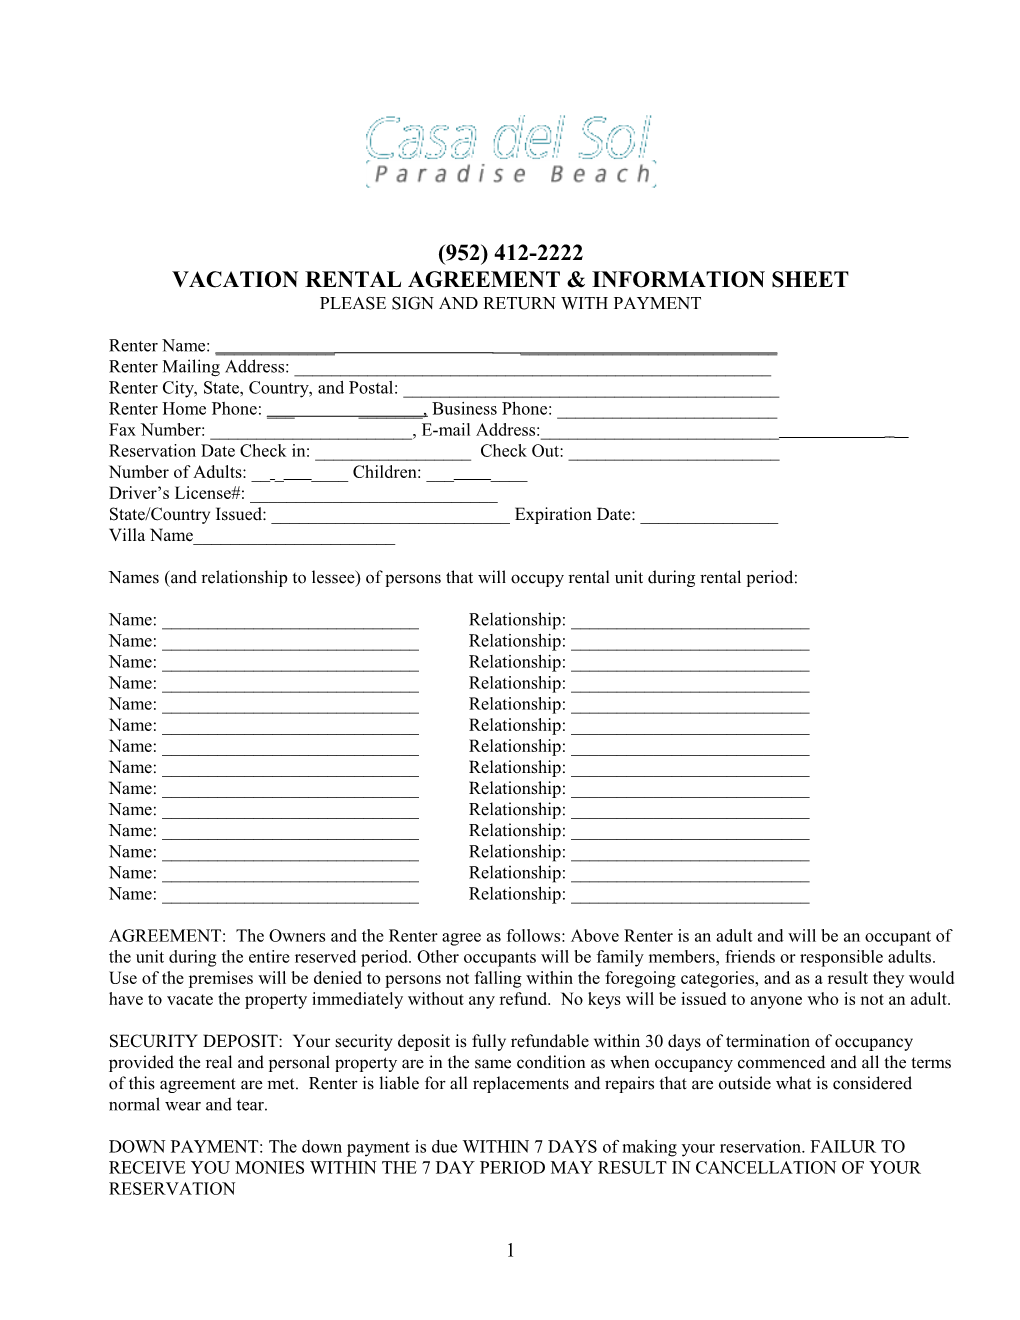 Vacation Rental Agreement & Information Sheet